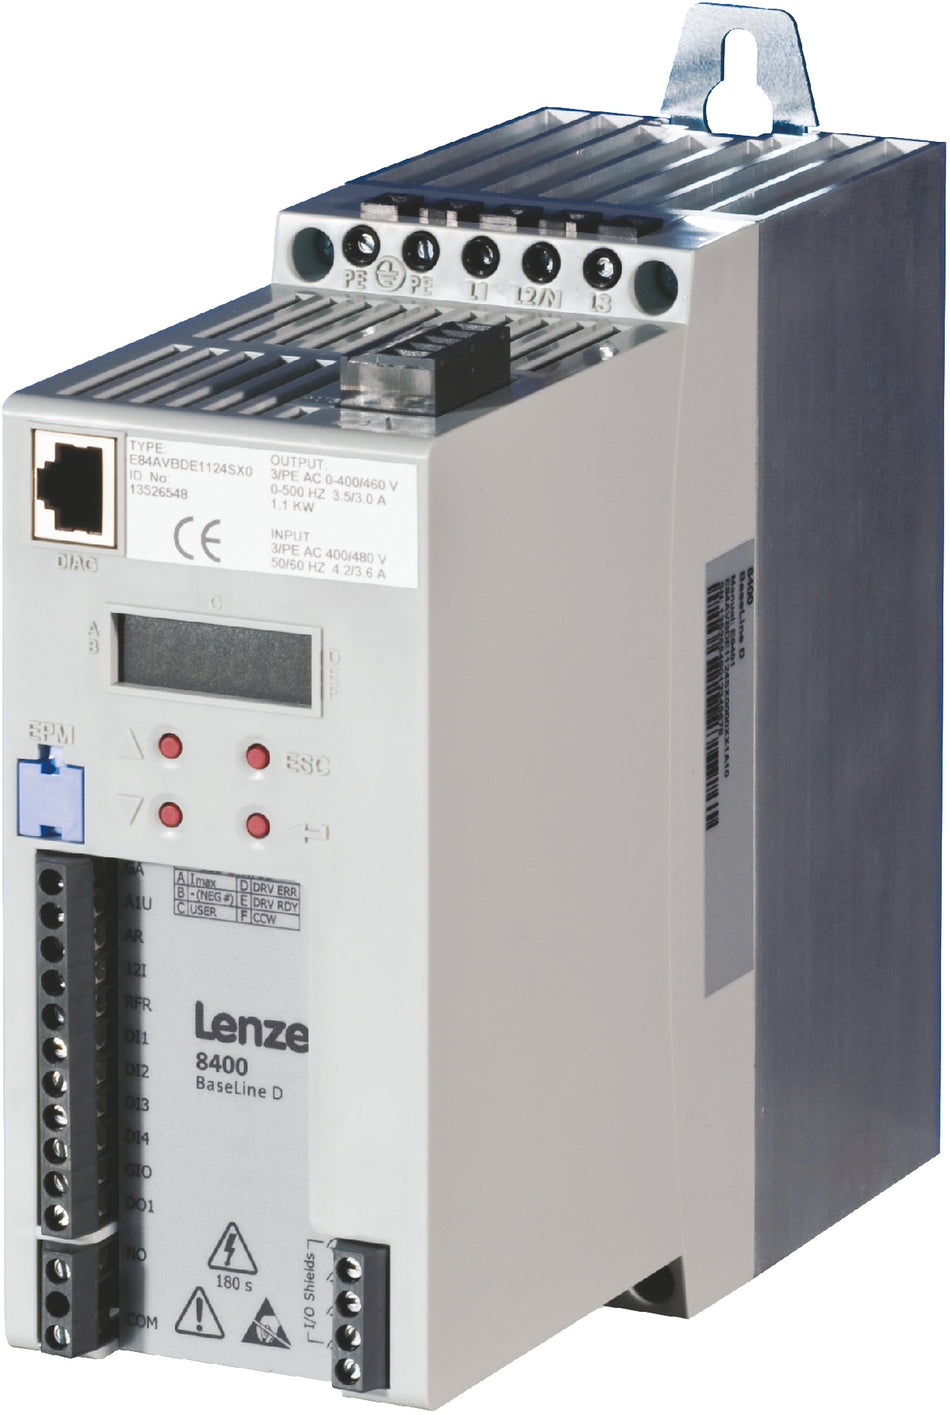 Lenze Inverter Drives 8400 BaseLine -  E84AVBCE7514SX0XX3A34 0.75 kW